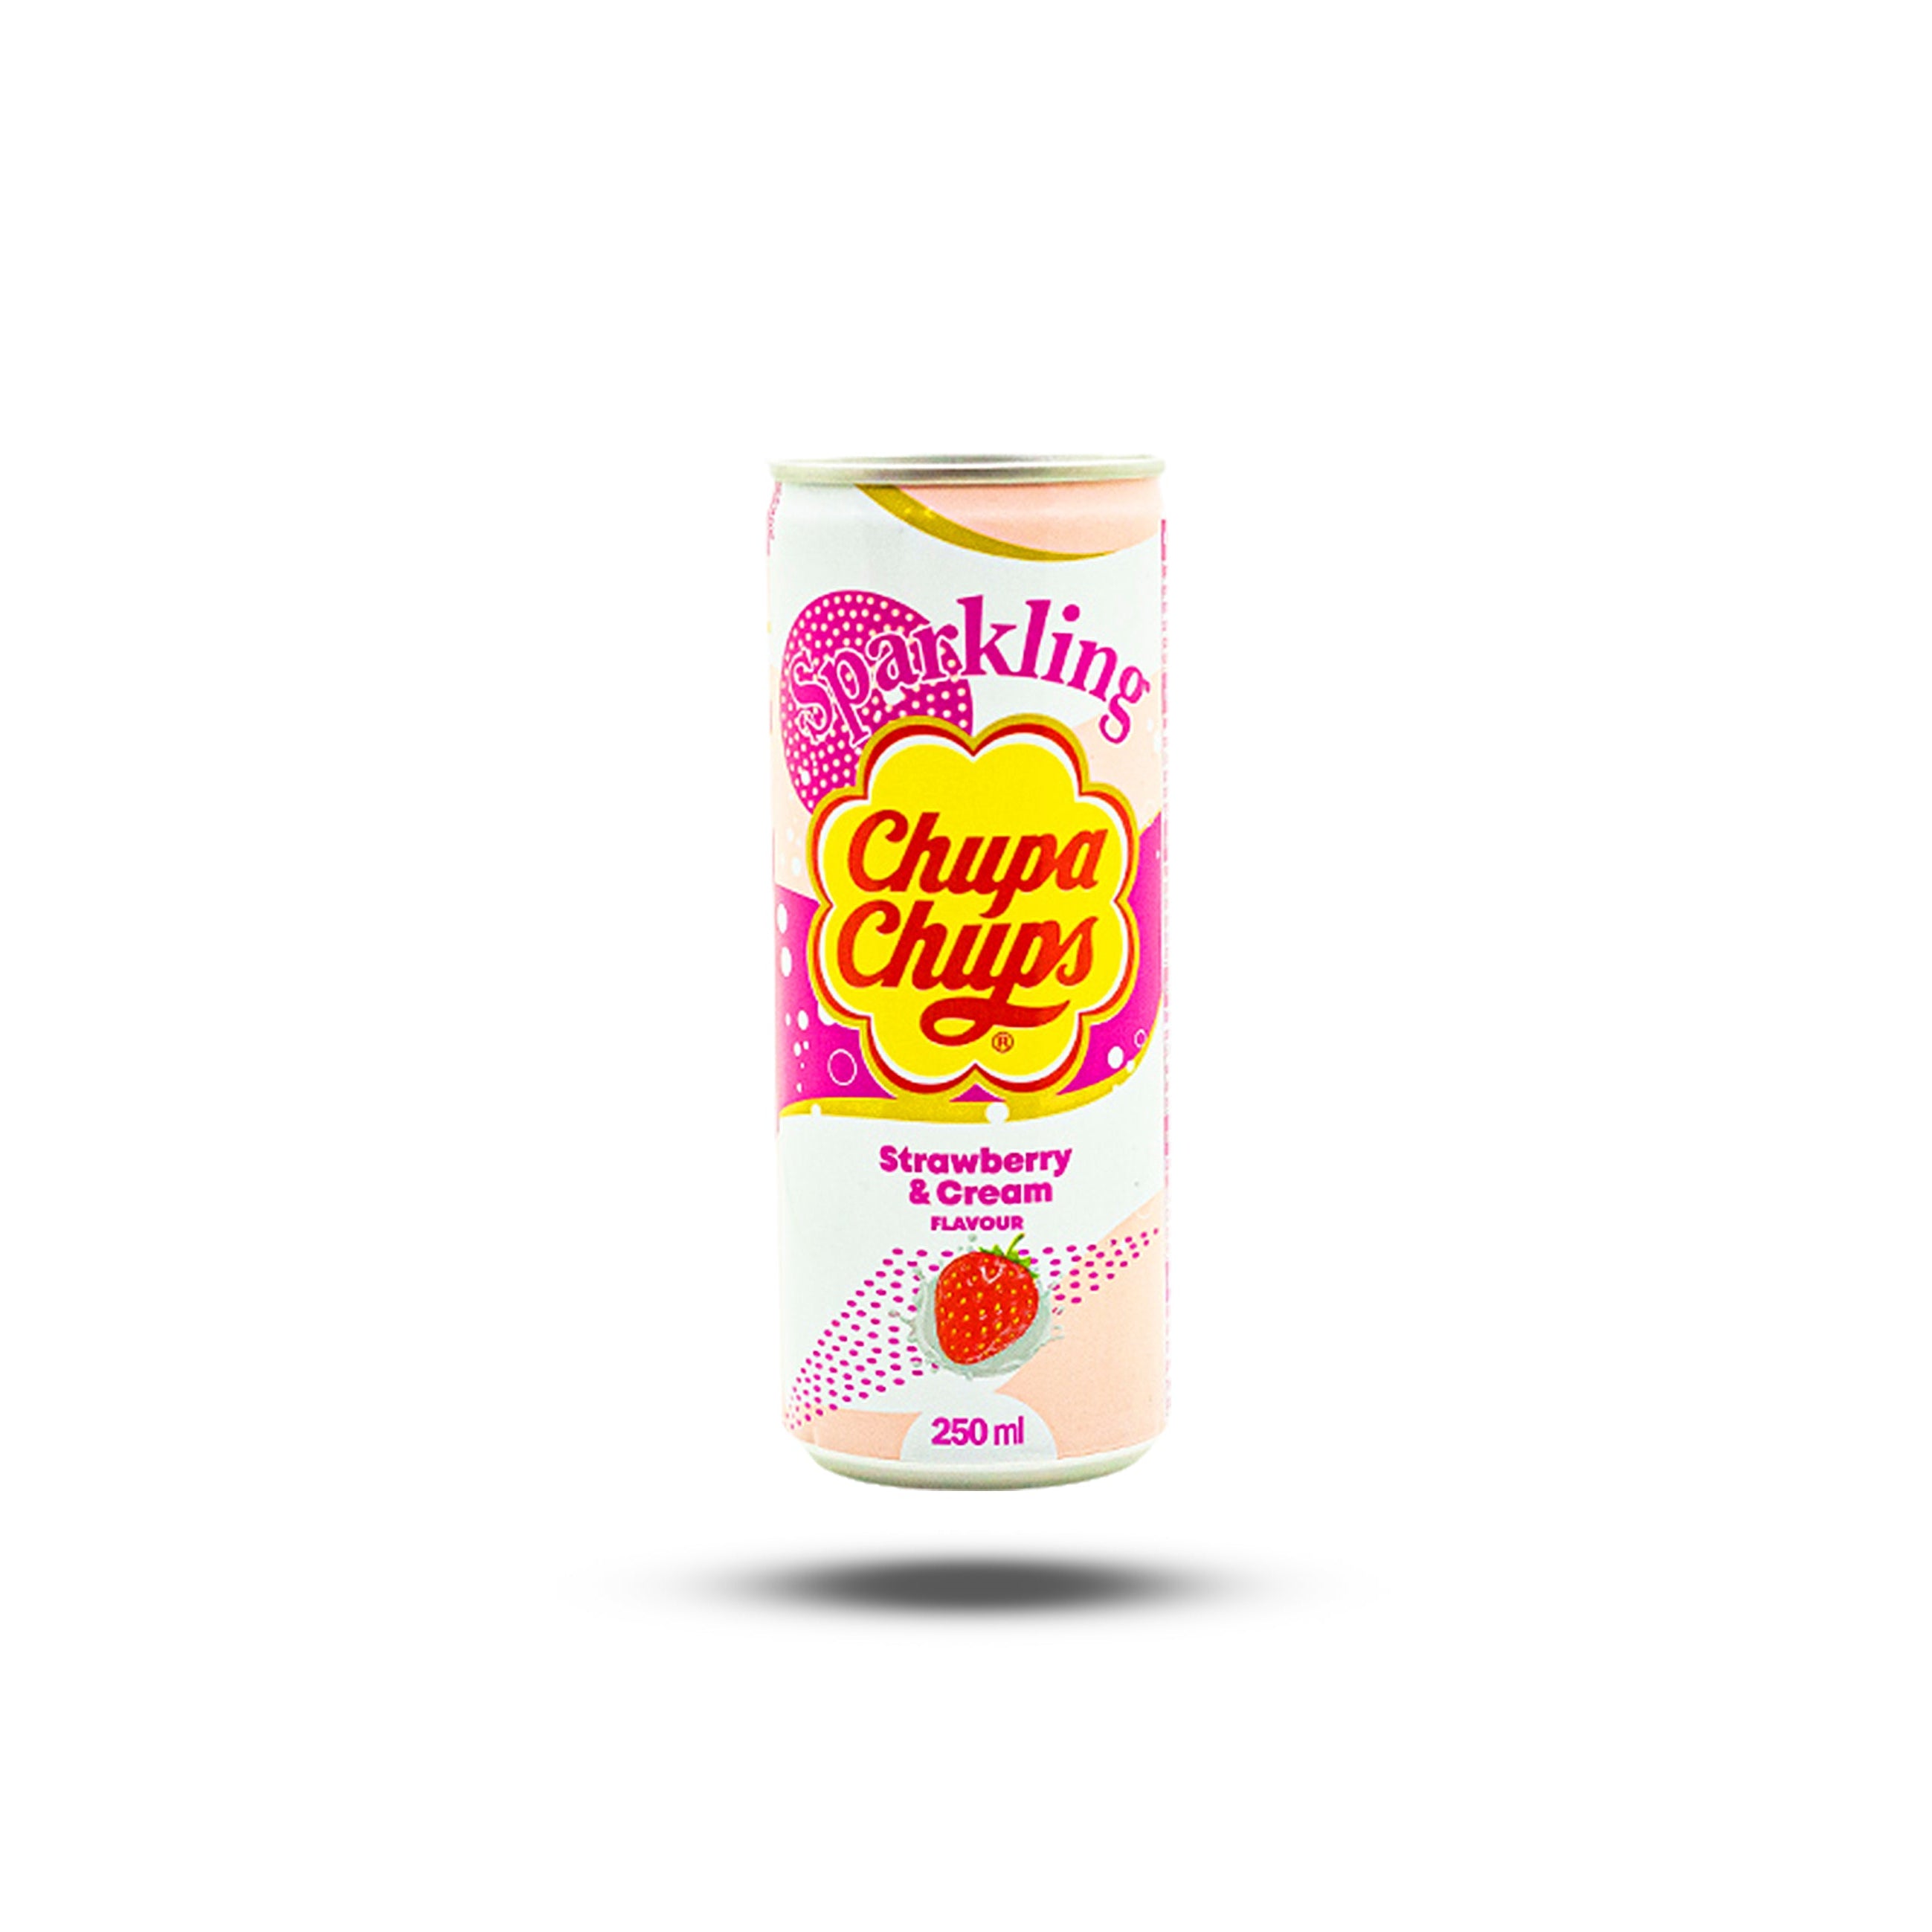 Sparkling Chupa Chups Strawberry & Cream Flavour 250ml-Namyang Dairy. Co., Ltd.-SNACK SHOP AUSTRIA